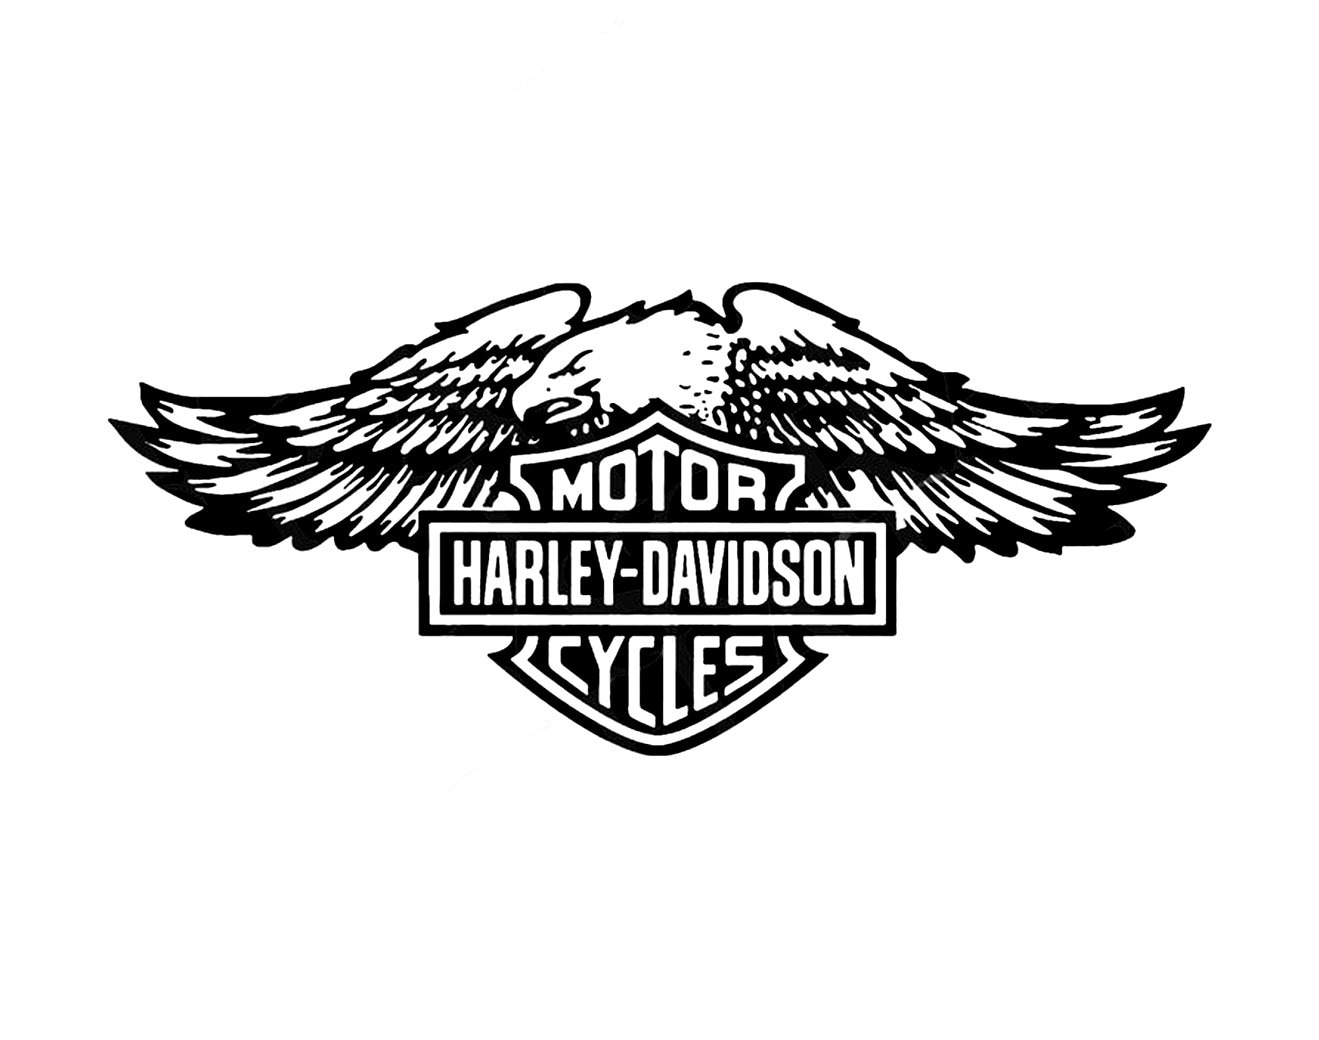 Motor Harley Davidson Wings Logo Svg Eagle Wings Svg Motorcycles The